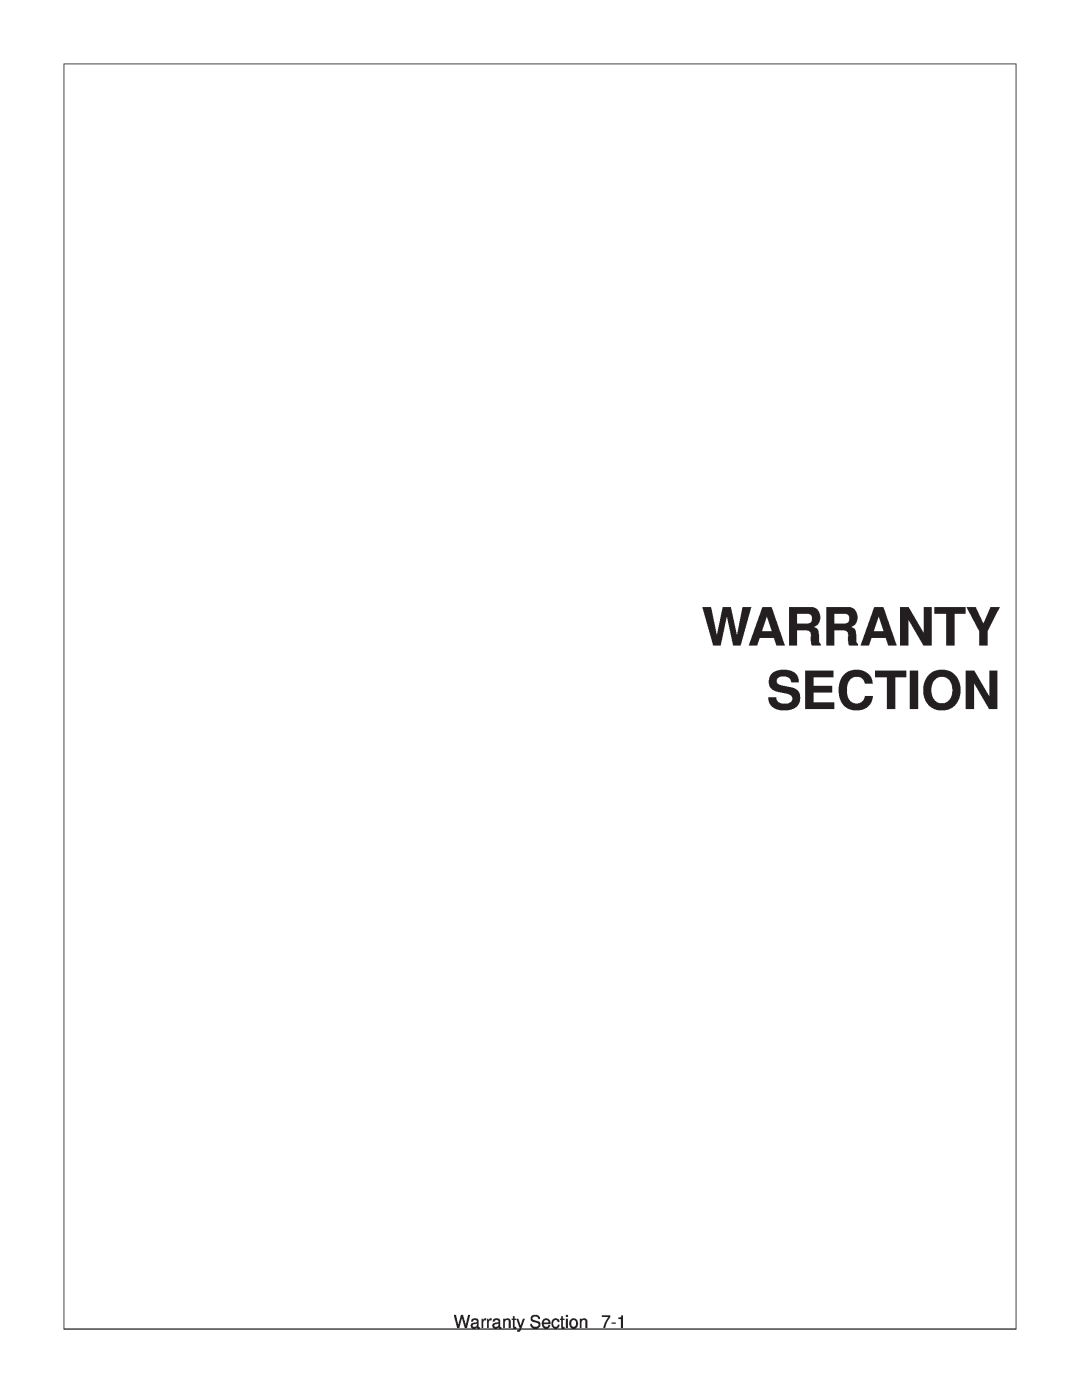 Tiger Products Co., Ltd 5101E, 5083E, 5093E manual Warranty Section 